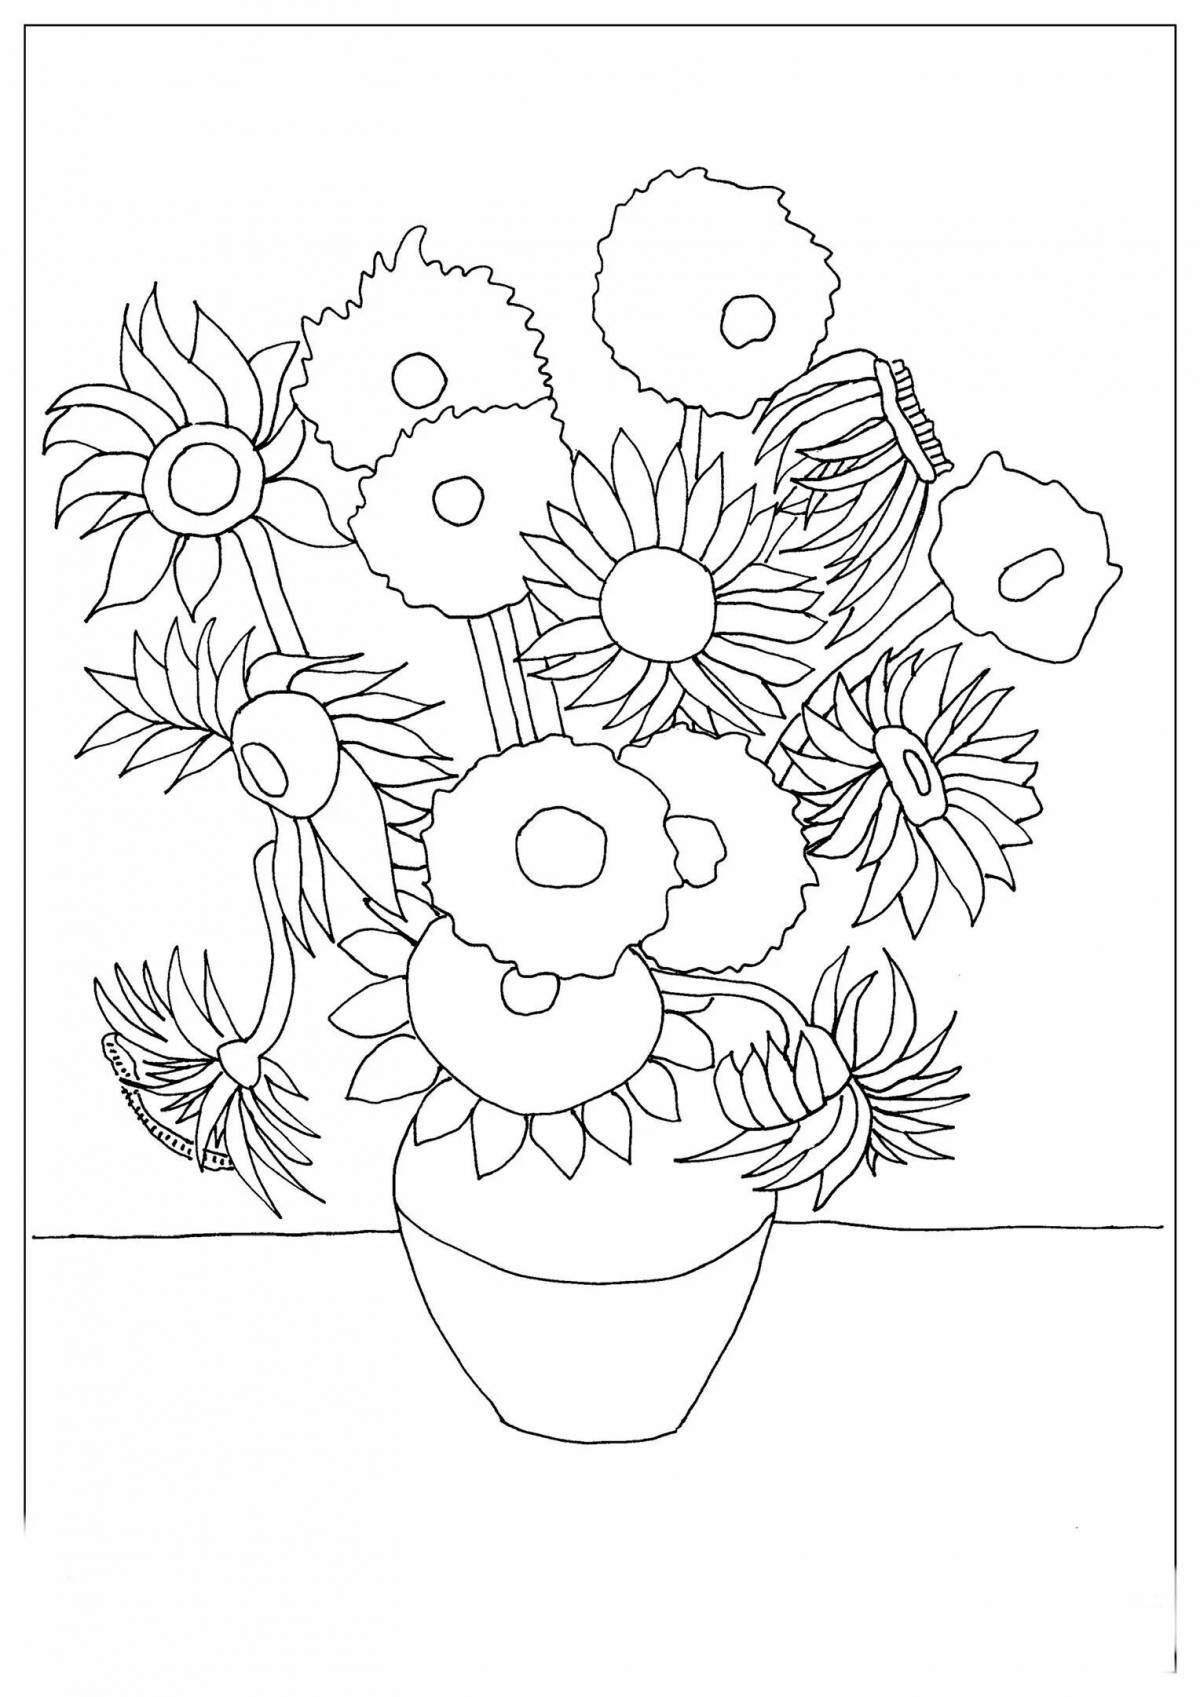 Bright sunflowers van gogh coloring book